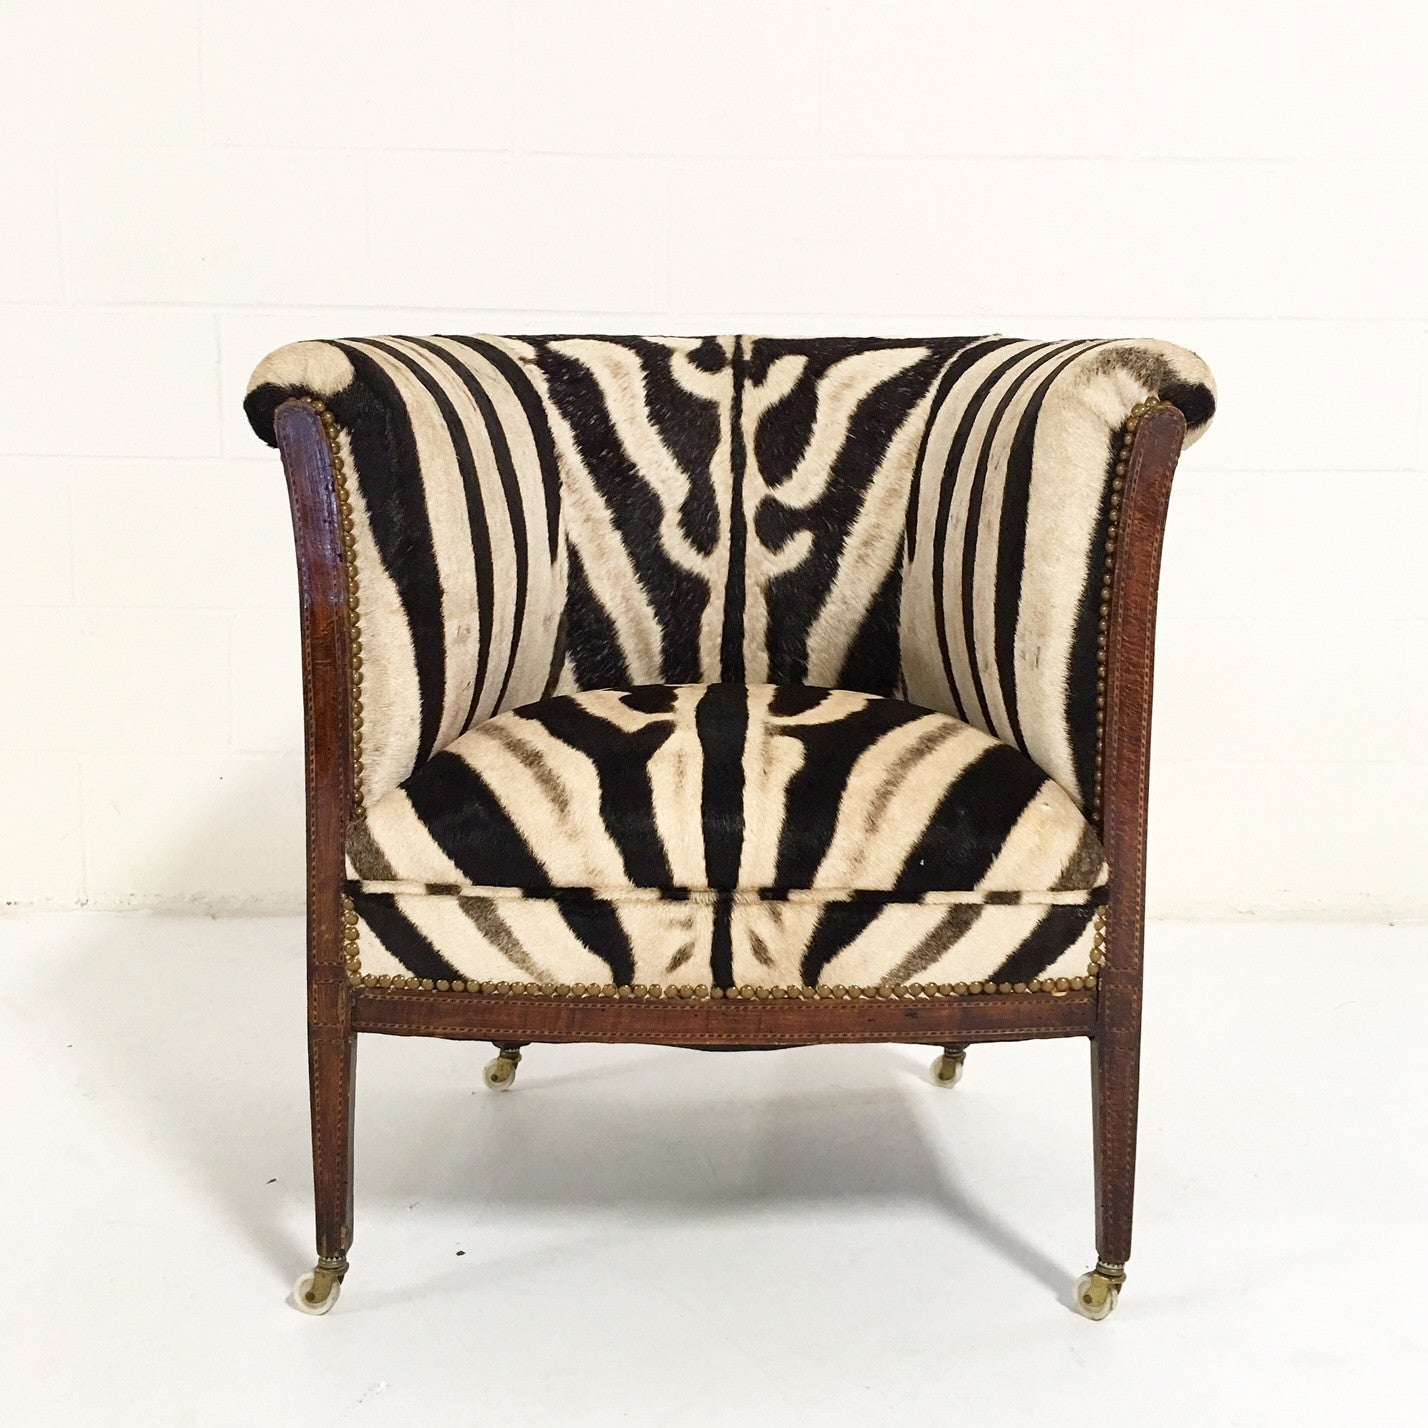 1930s Barrel Chair in Zebra Hide - FORSYTH